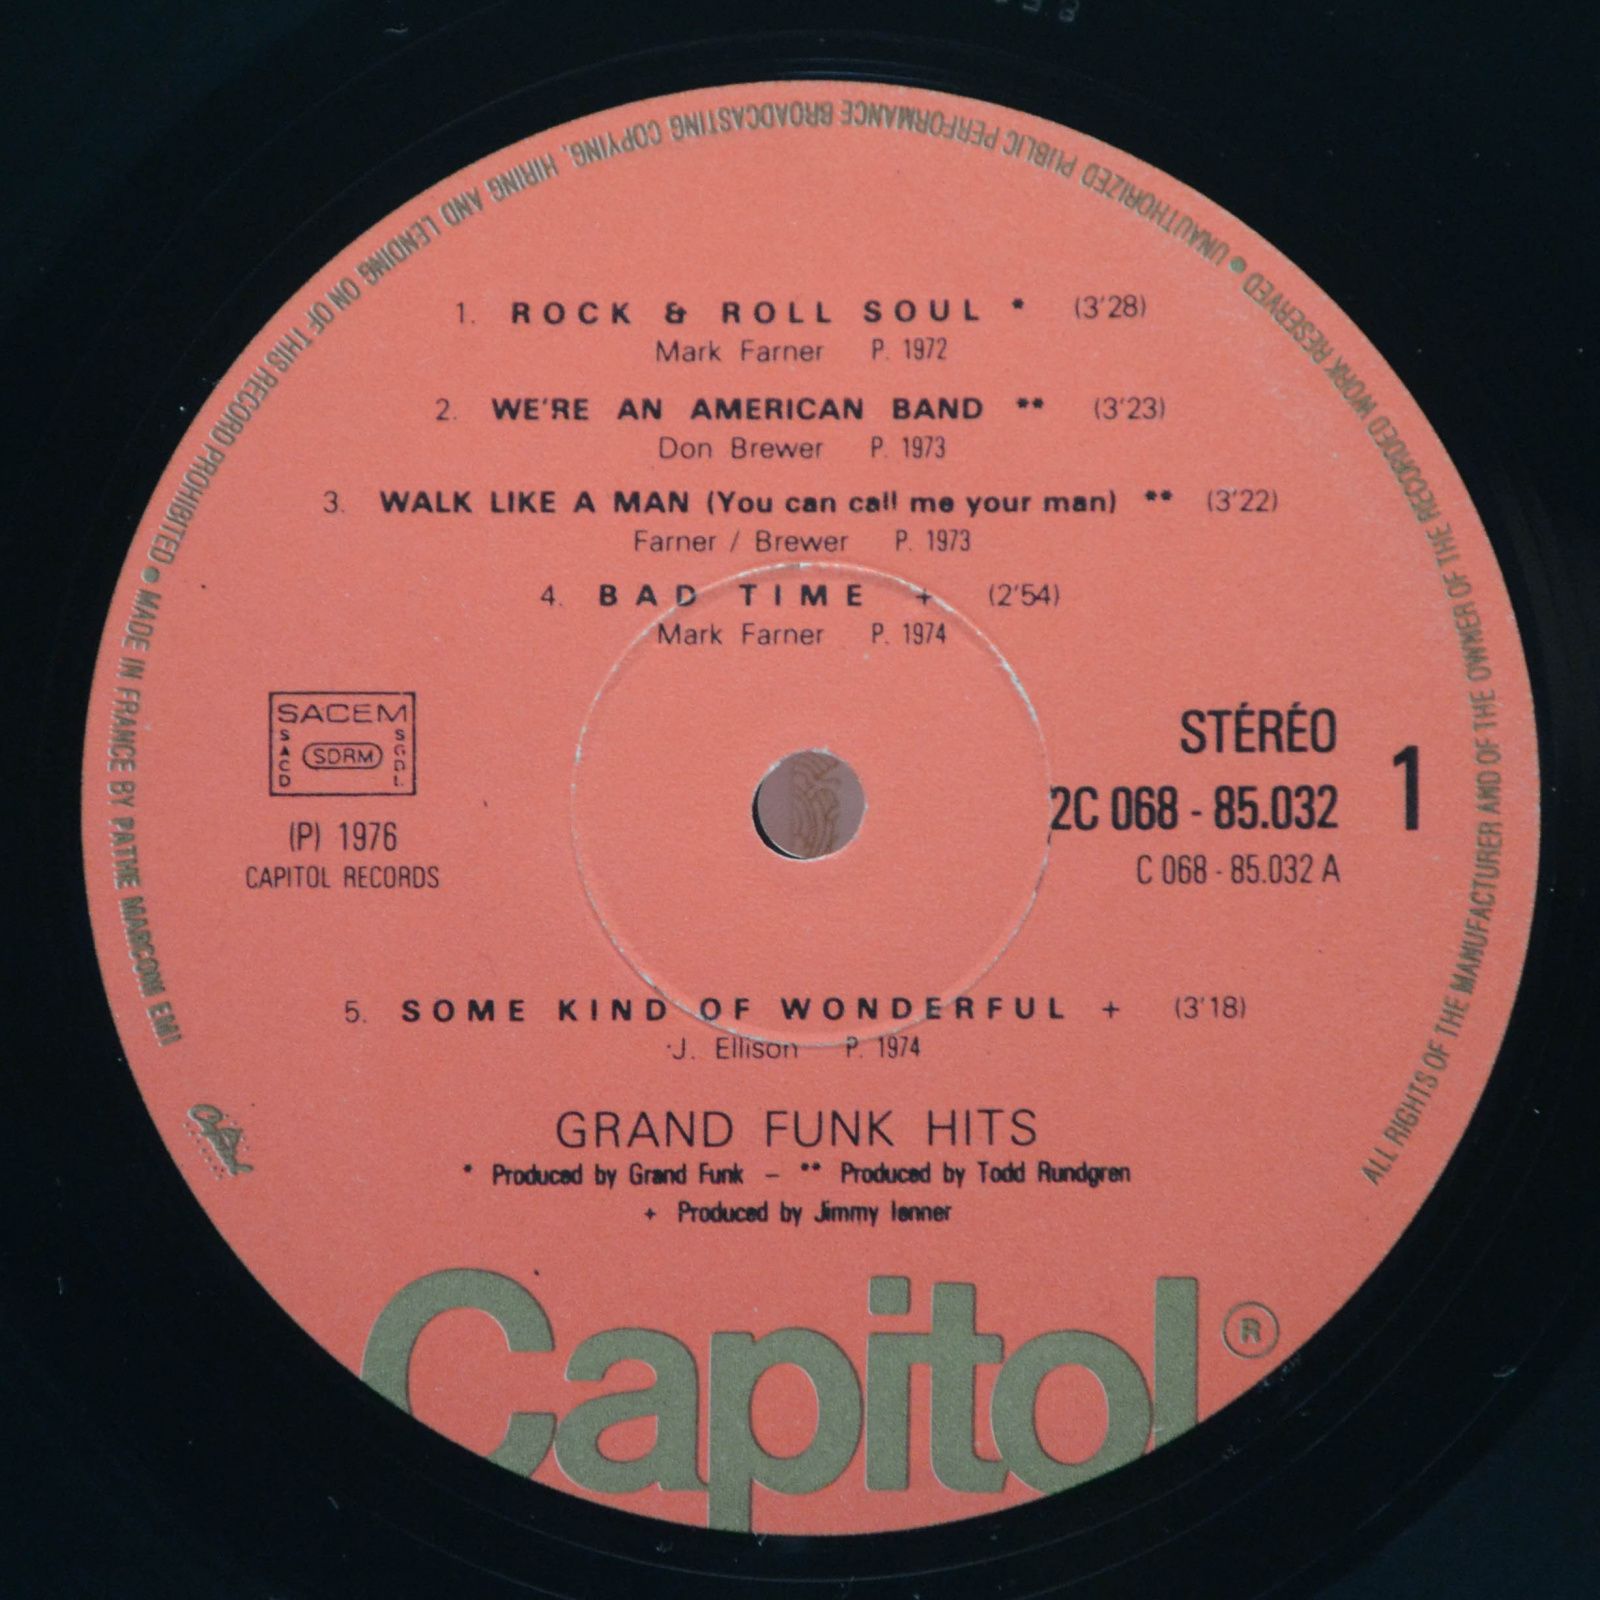 Grand Funk Railroad — Grand Funk Hits, 1976